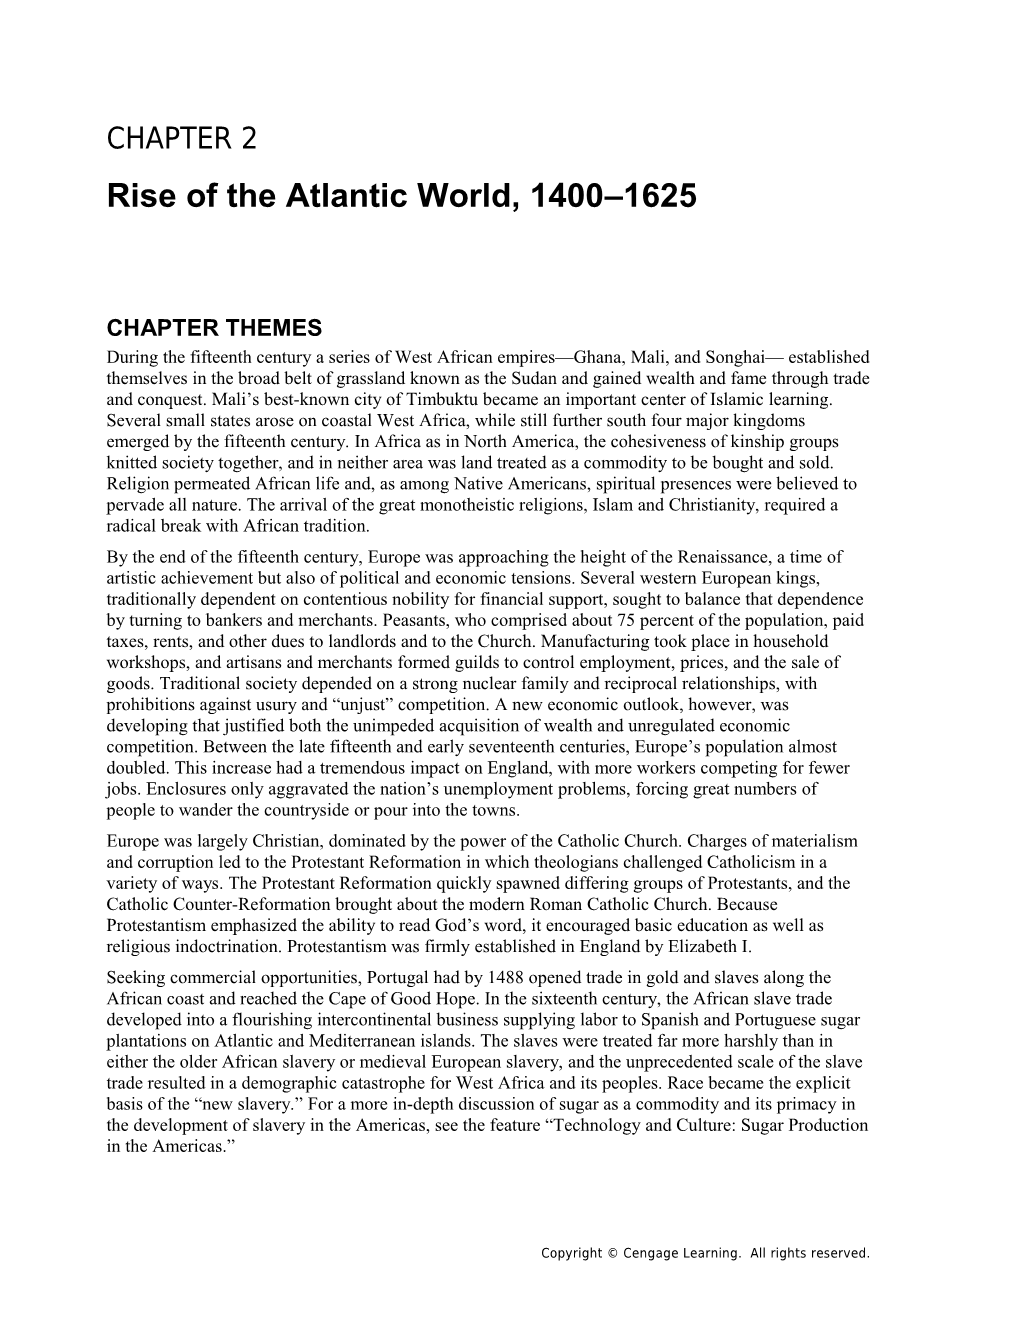 Rise of the Atlantic World, 1400 1625